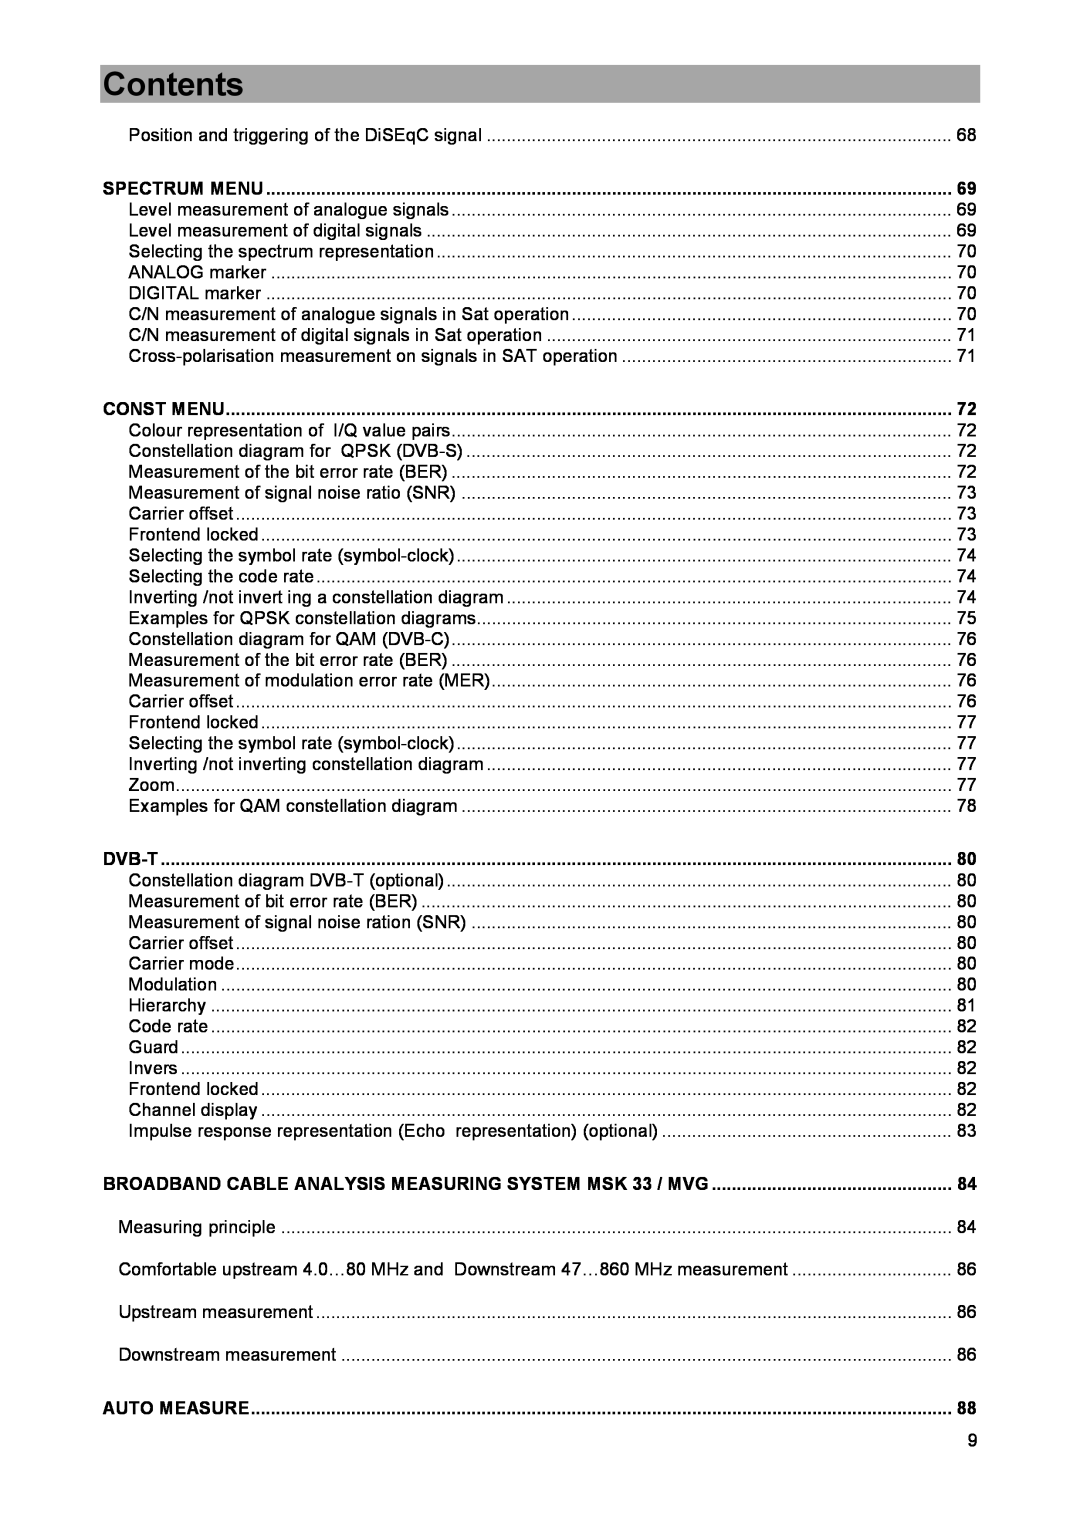 DreamGEAR manual Contents, Spectrum Menu, Const Menu, Dvb-T, BROADBAND CABLE ANALYSIS MEASURING SYSTEM MSK 33 / MVG 